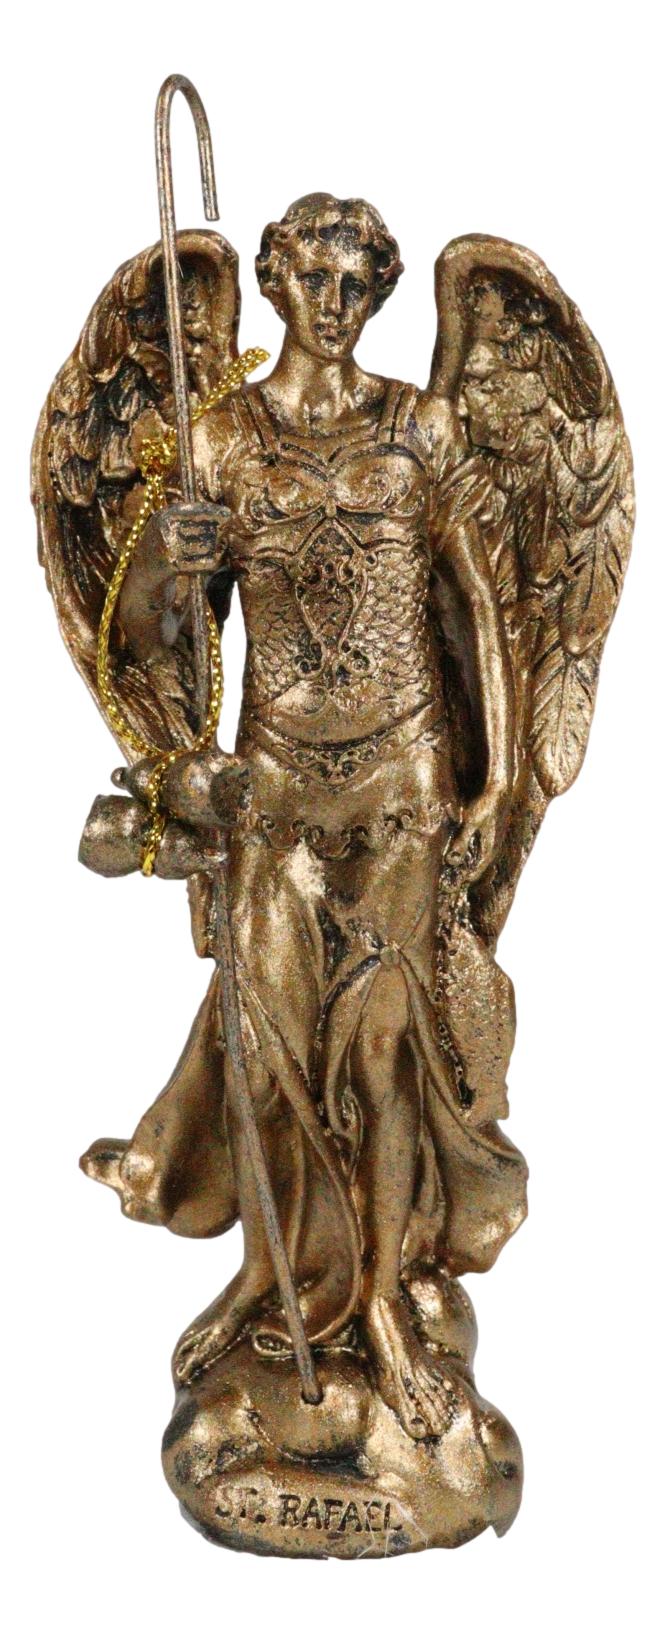 Ebros Catholic Archangel Saint Raphael Statue 5"Tall Sacrament of Pennance And Healing